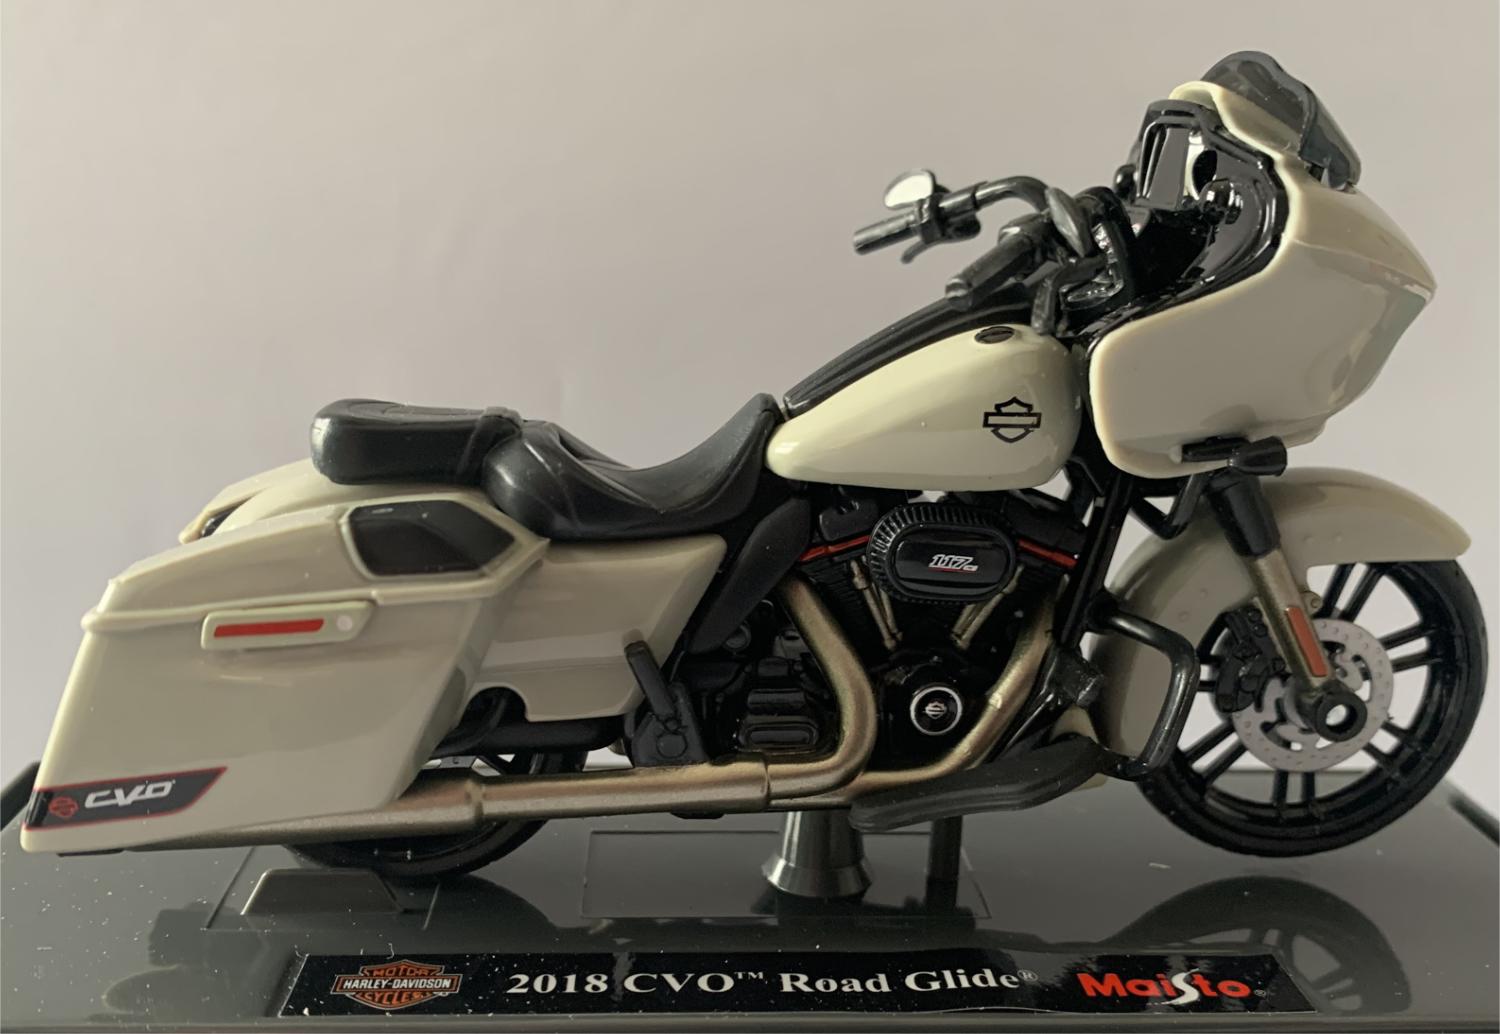 Harley Davidson 2018 CVO Road Glide in light grey 1:18 scale model from Maisto